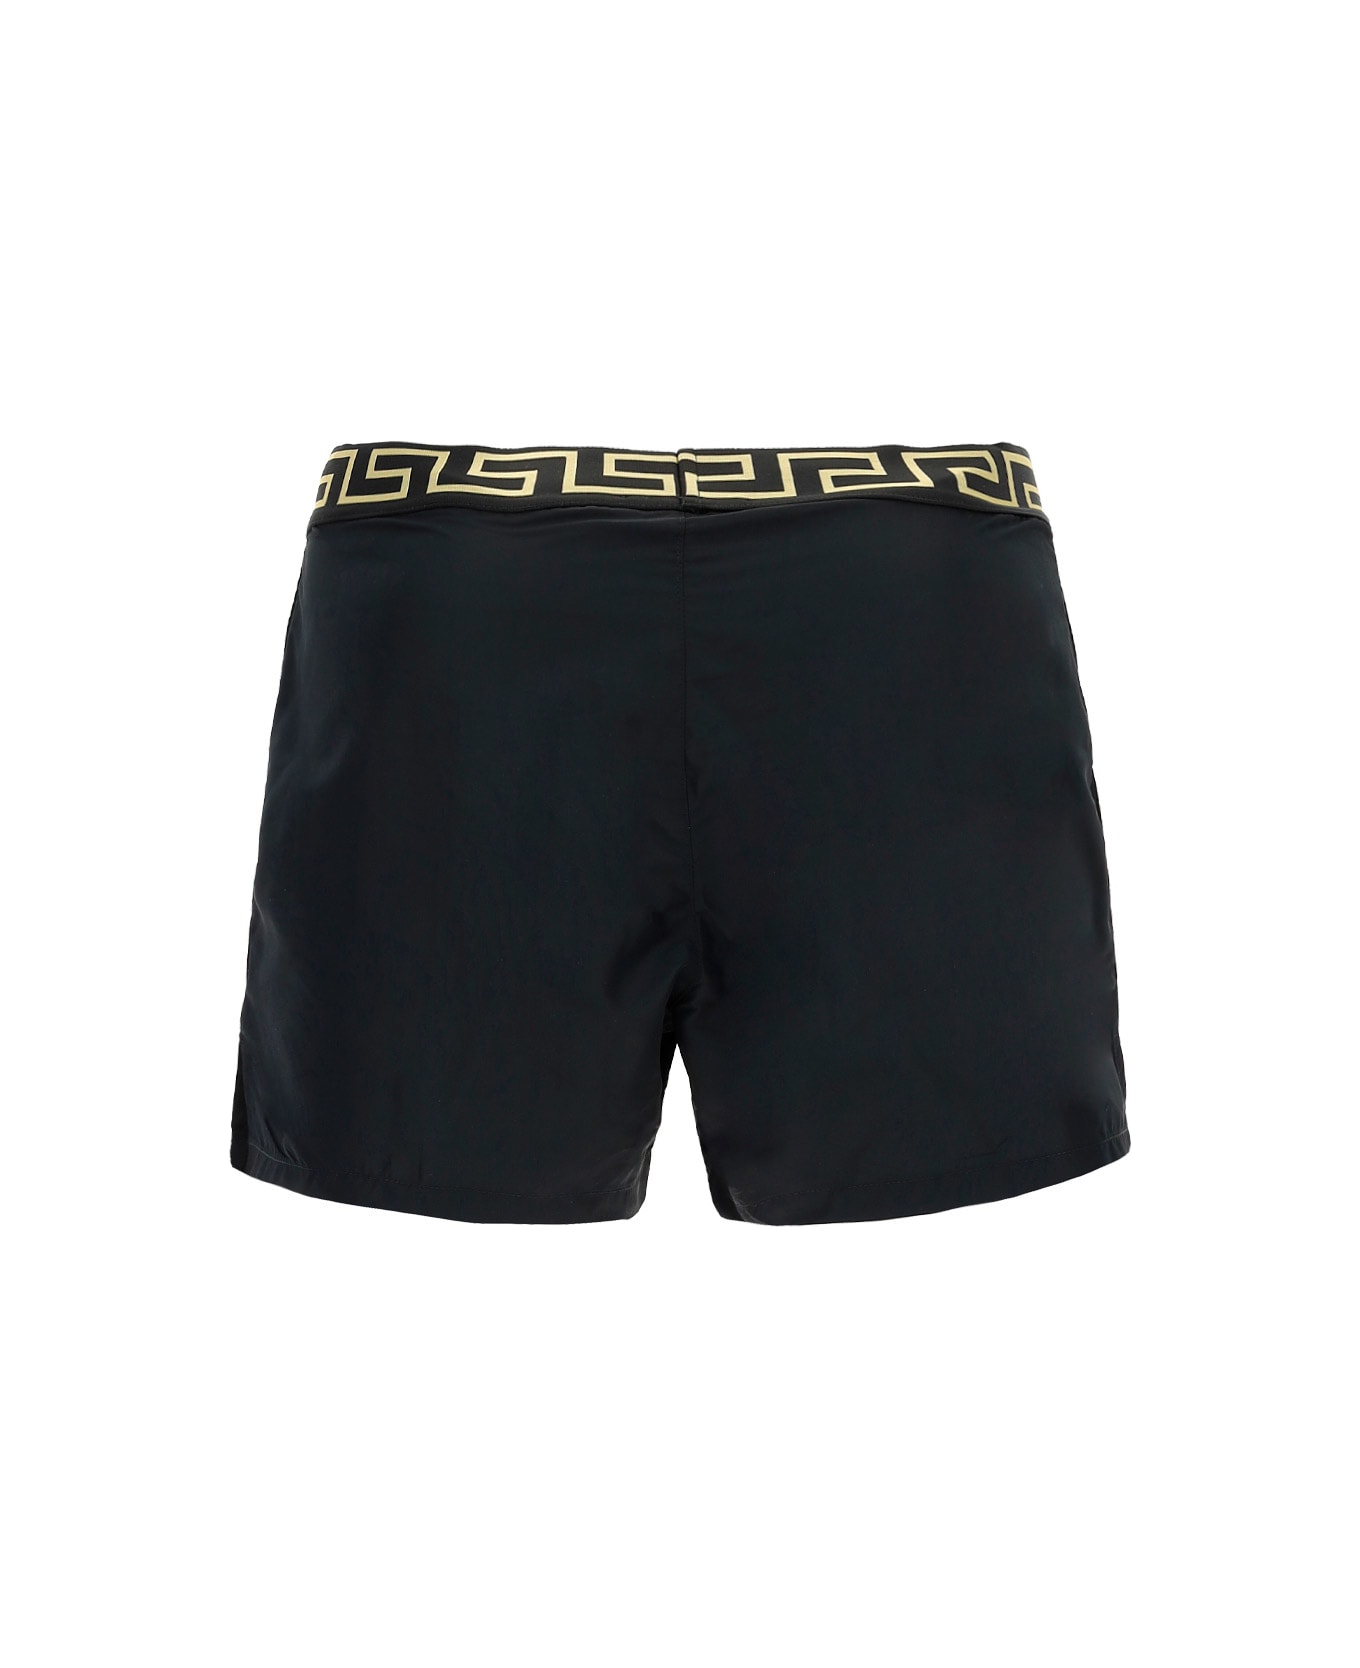 Versace Swimwear - G Black Gold Greek Key